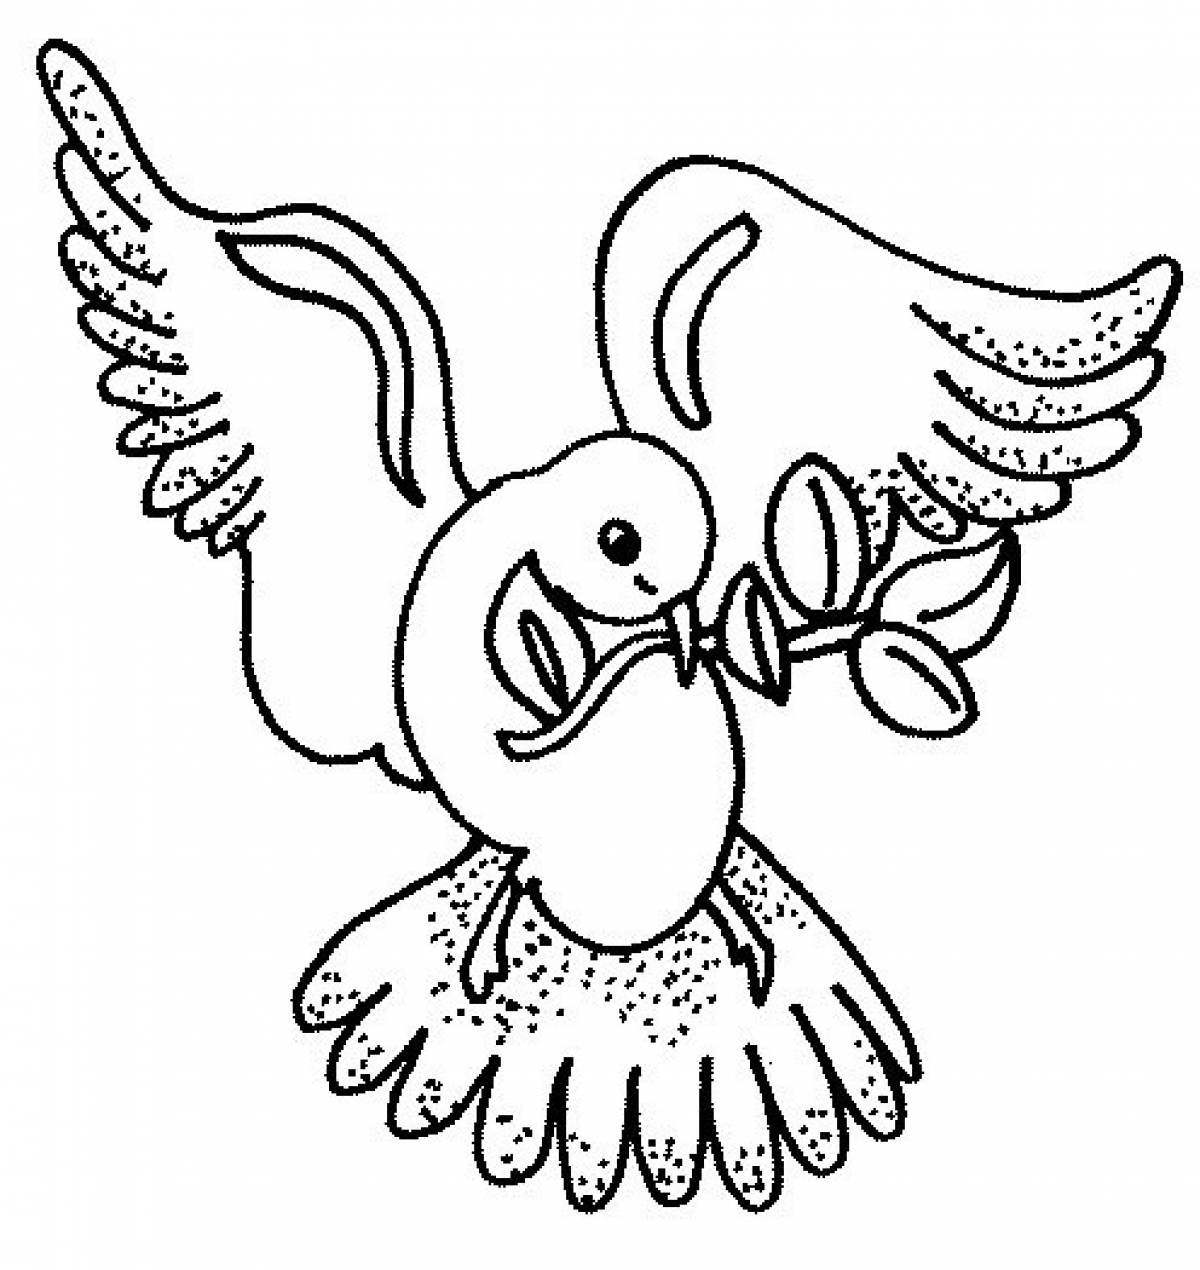 Dove of peace for children